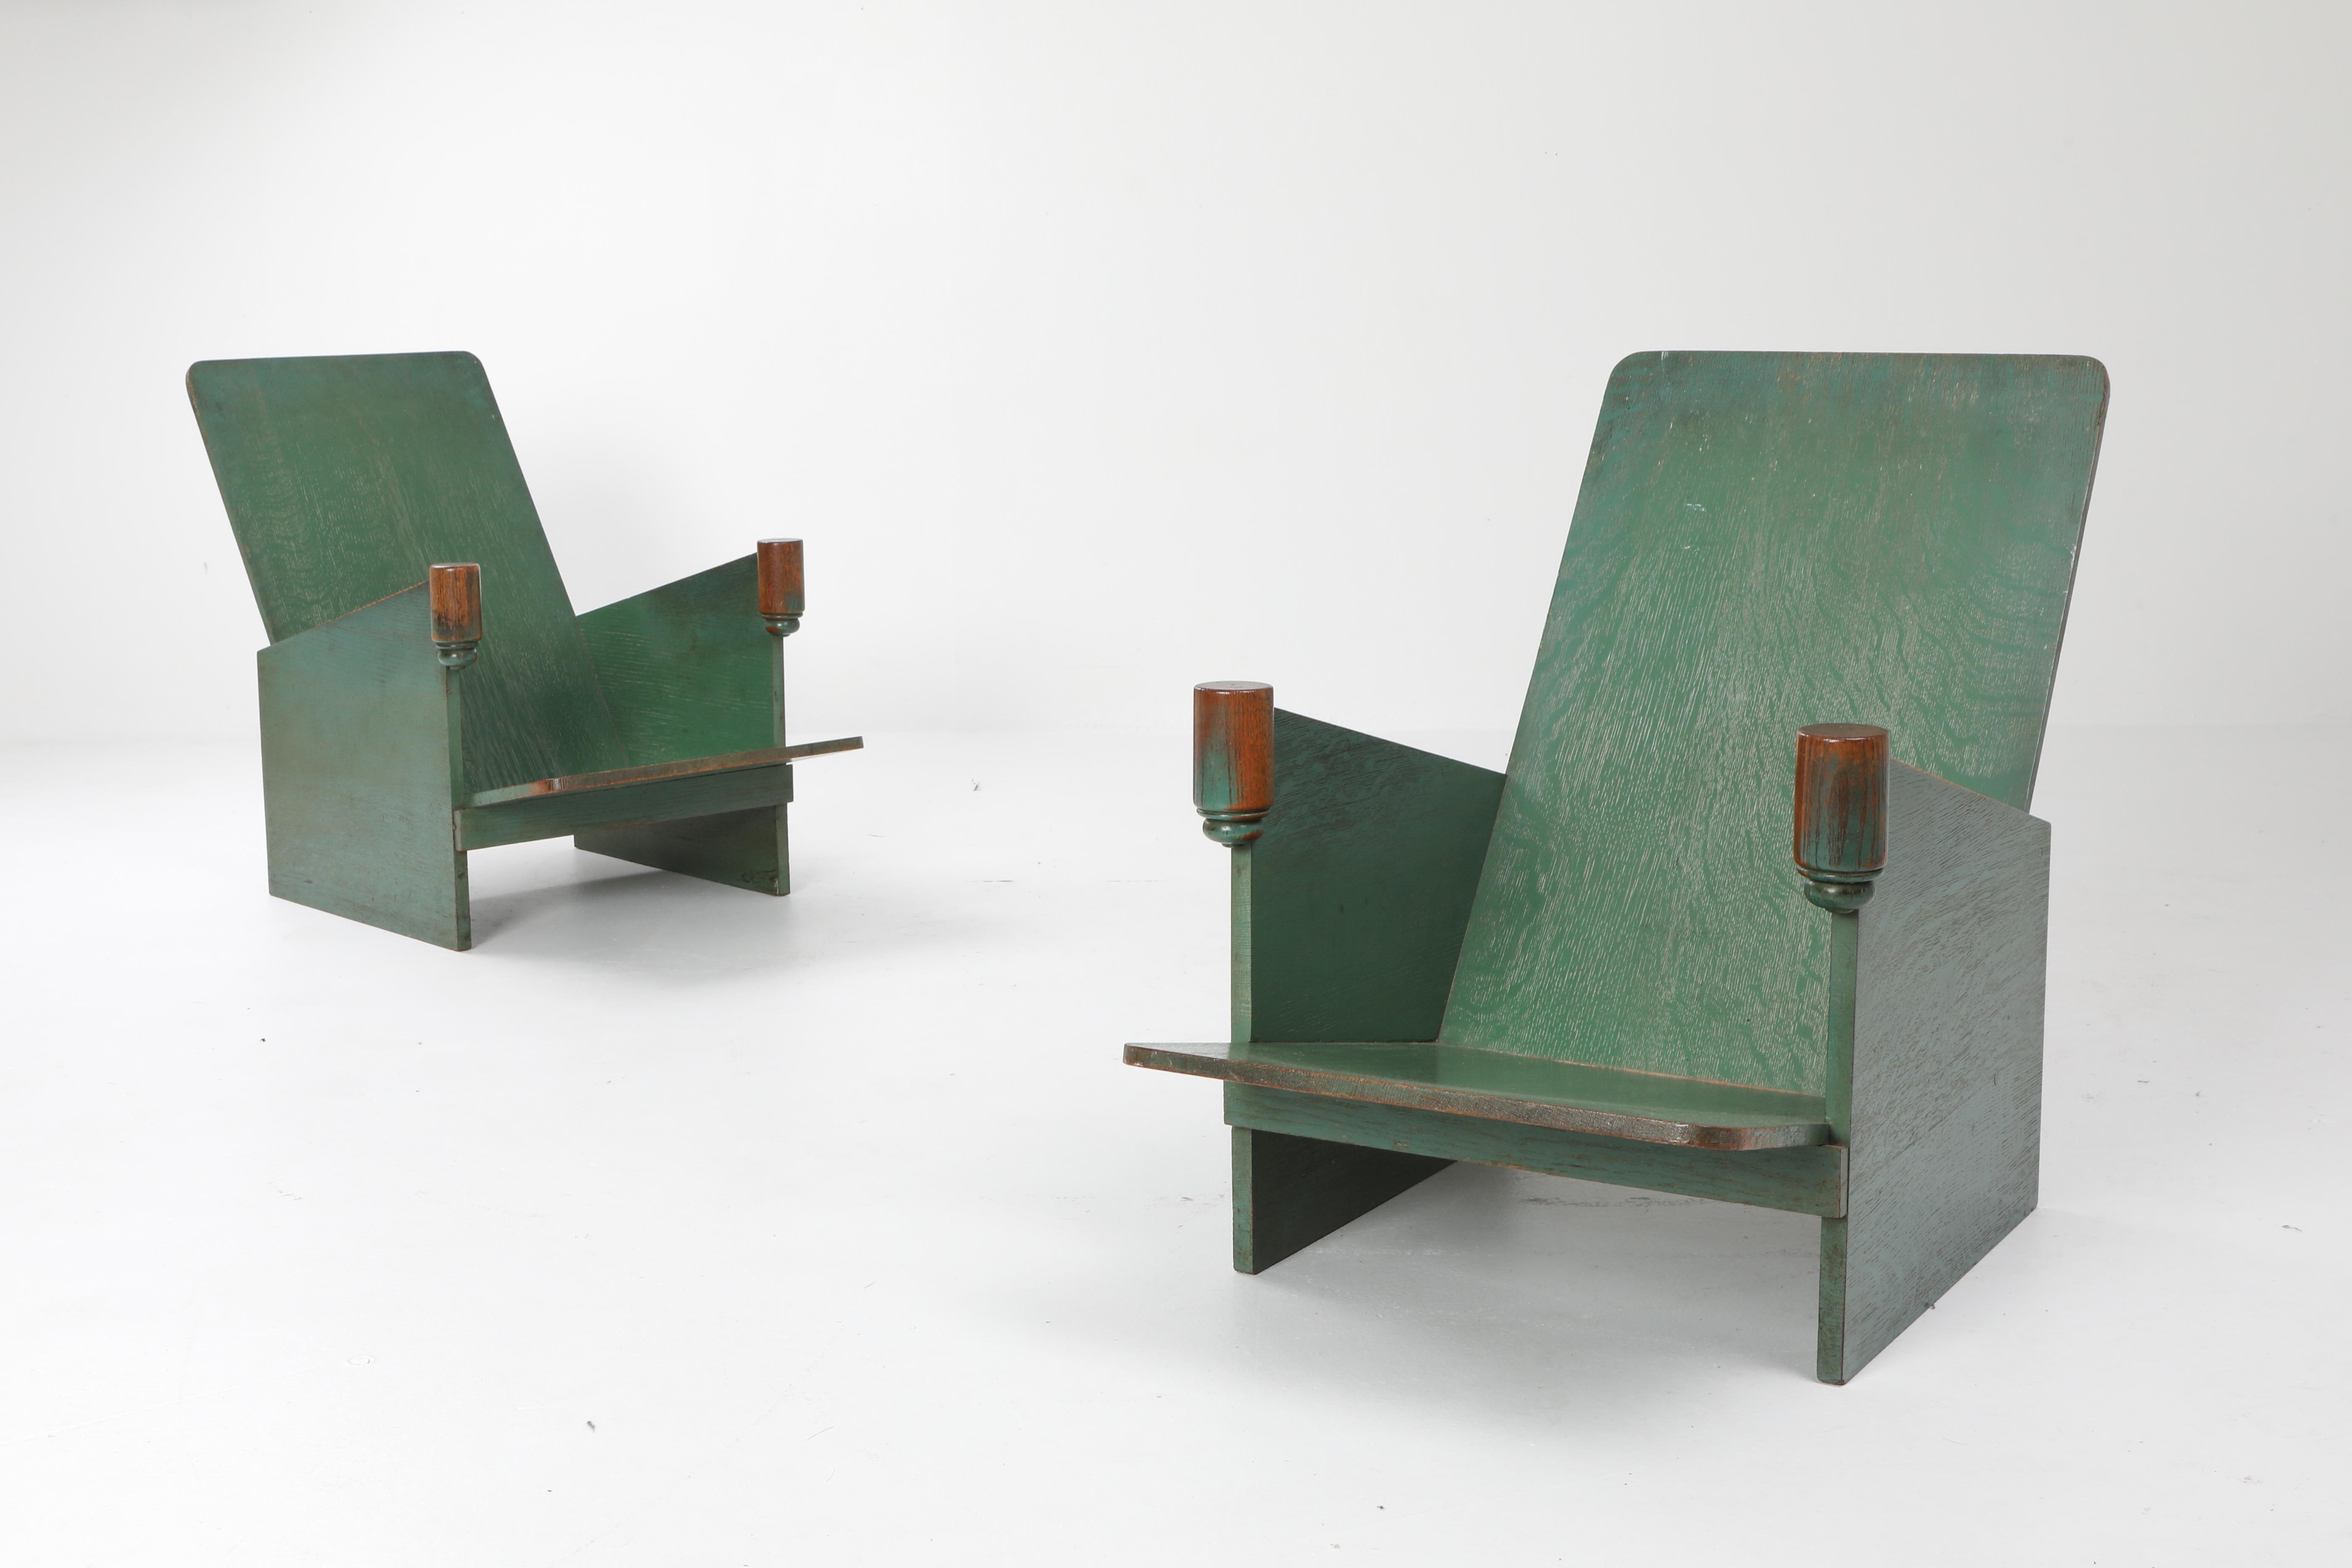 Modernist patinated oak lounge chairs of the Art Deco period, attributed to Huib Hoste and Karel Maes, Belgium, 1920s

Victor Servranckx, Karel Maes, Pierre-Louis Flouquet were amongst Belgium's most famous constructivist artists.

  